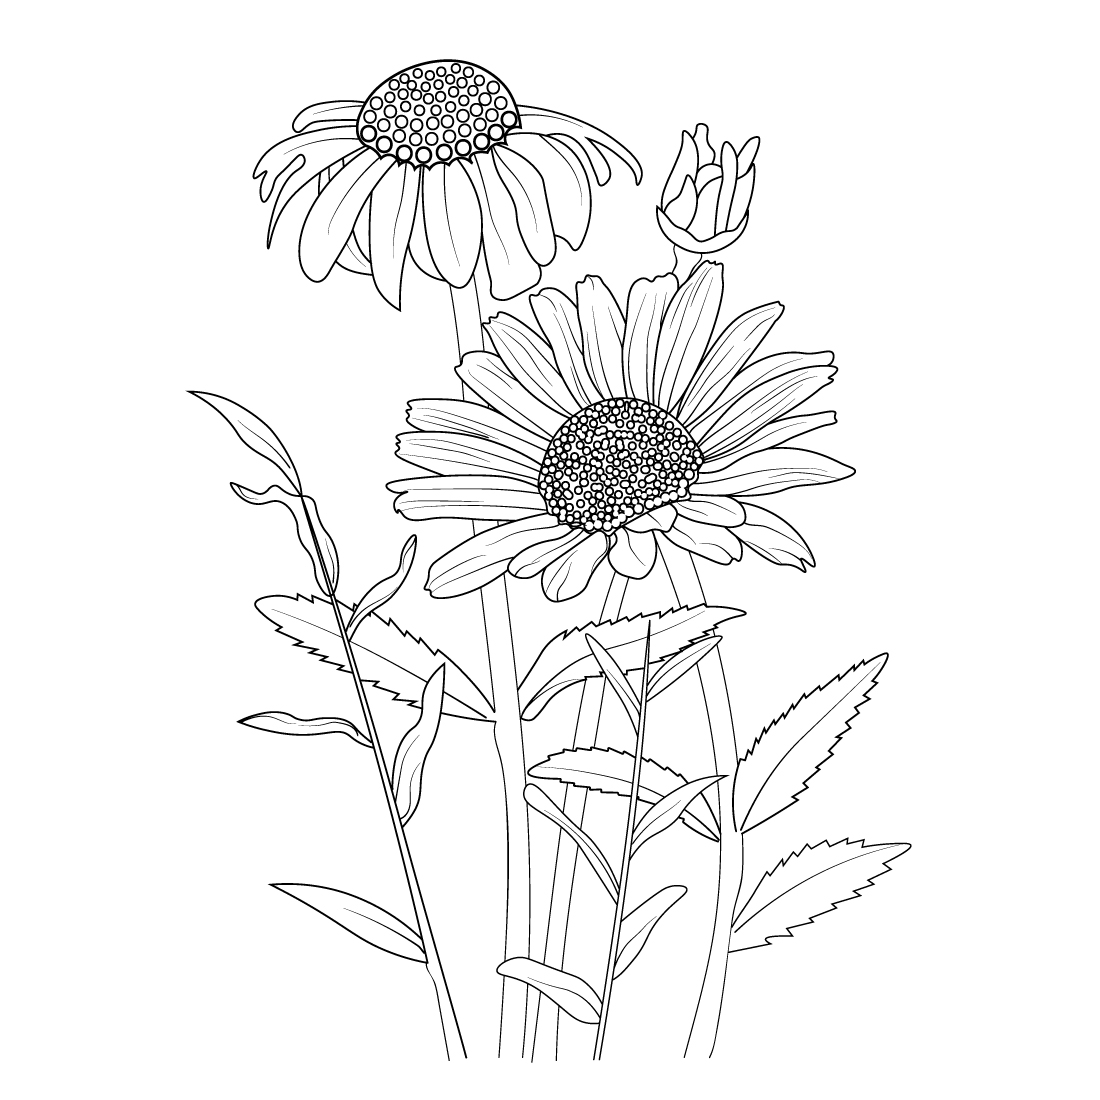 gerbera daisy drawing outline, easy gerbera daisy drawing, outline simple daisy drawing preview image.